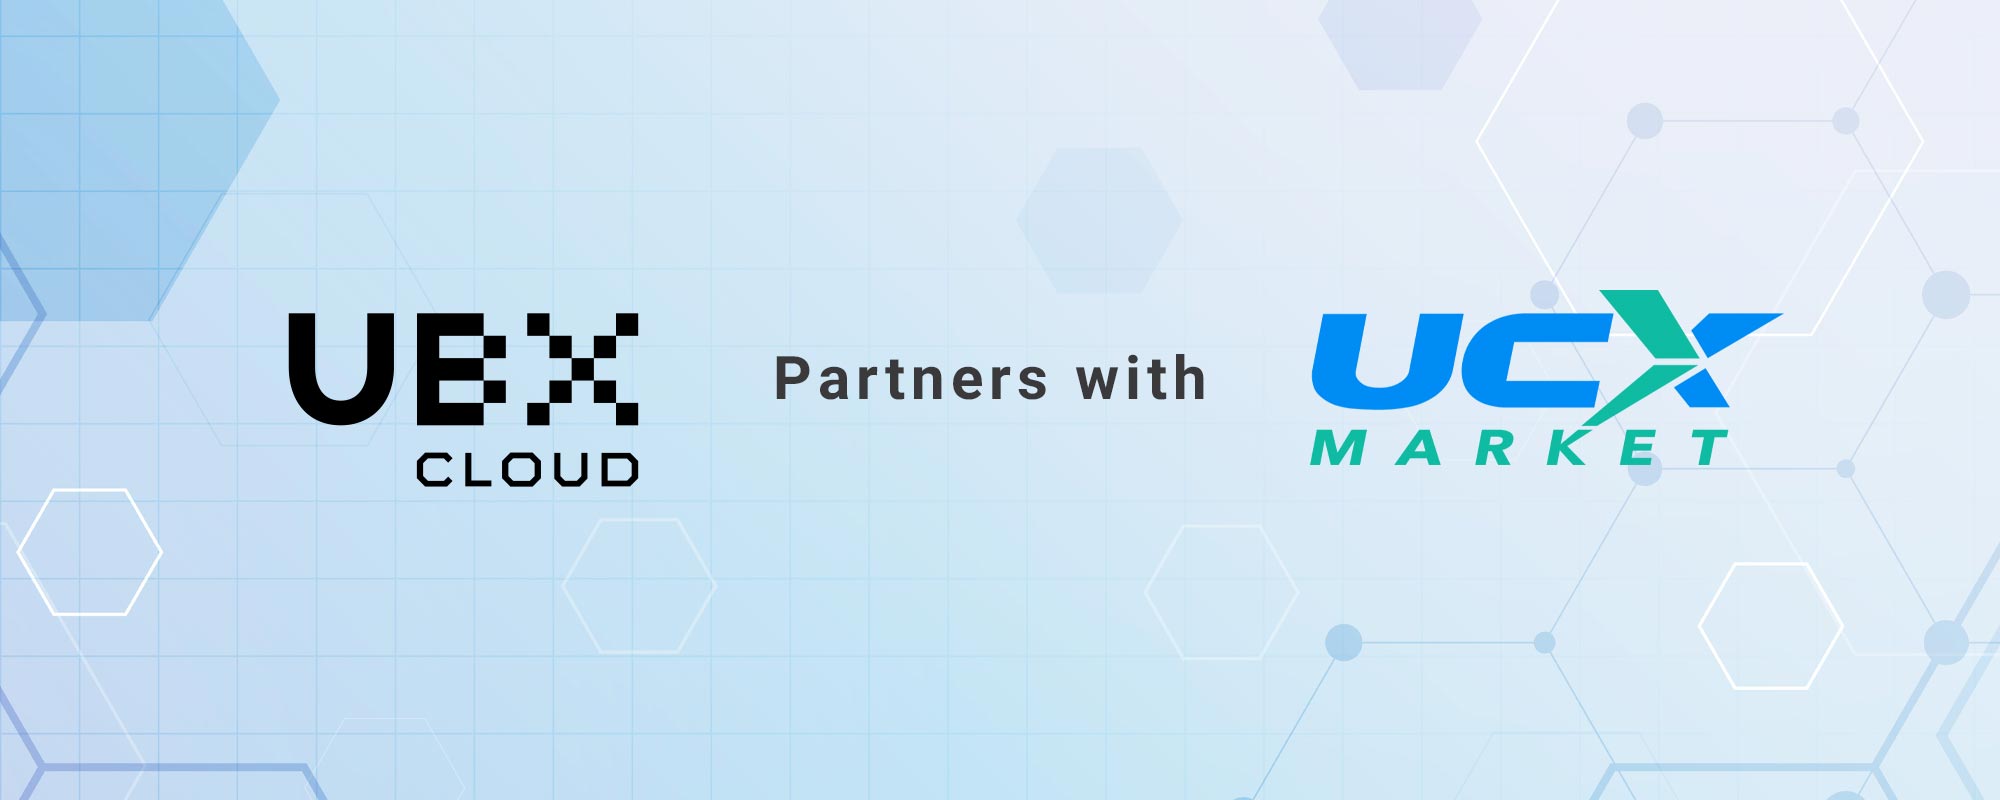 UCXmarket strategic partnership with UBX Cloud